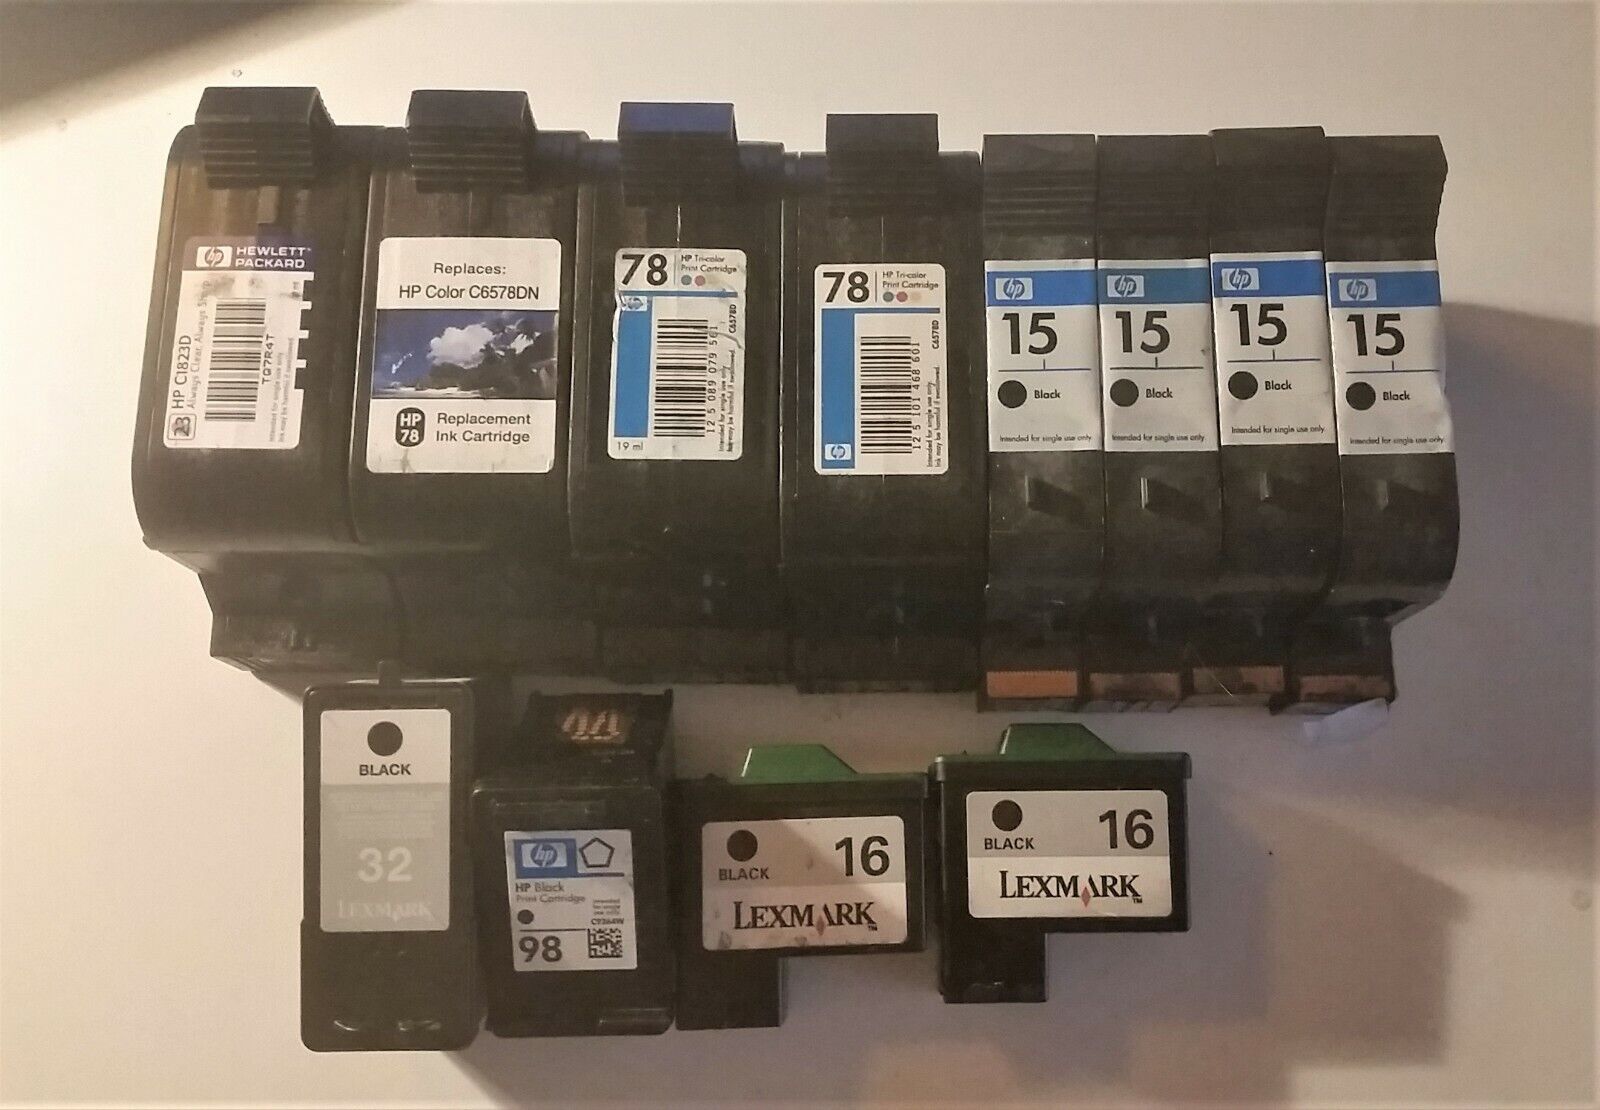 Lot of 12 EMPTY Printer Ink Cartridges Color Black HP 15 78 98 Lexmark 16 32